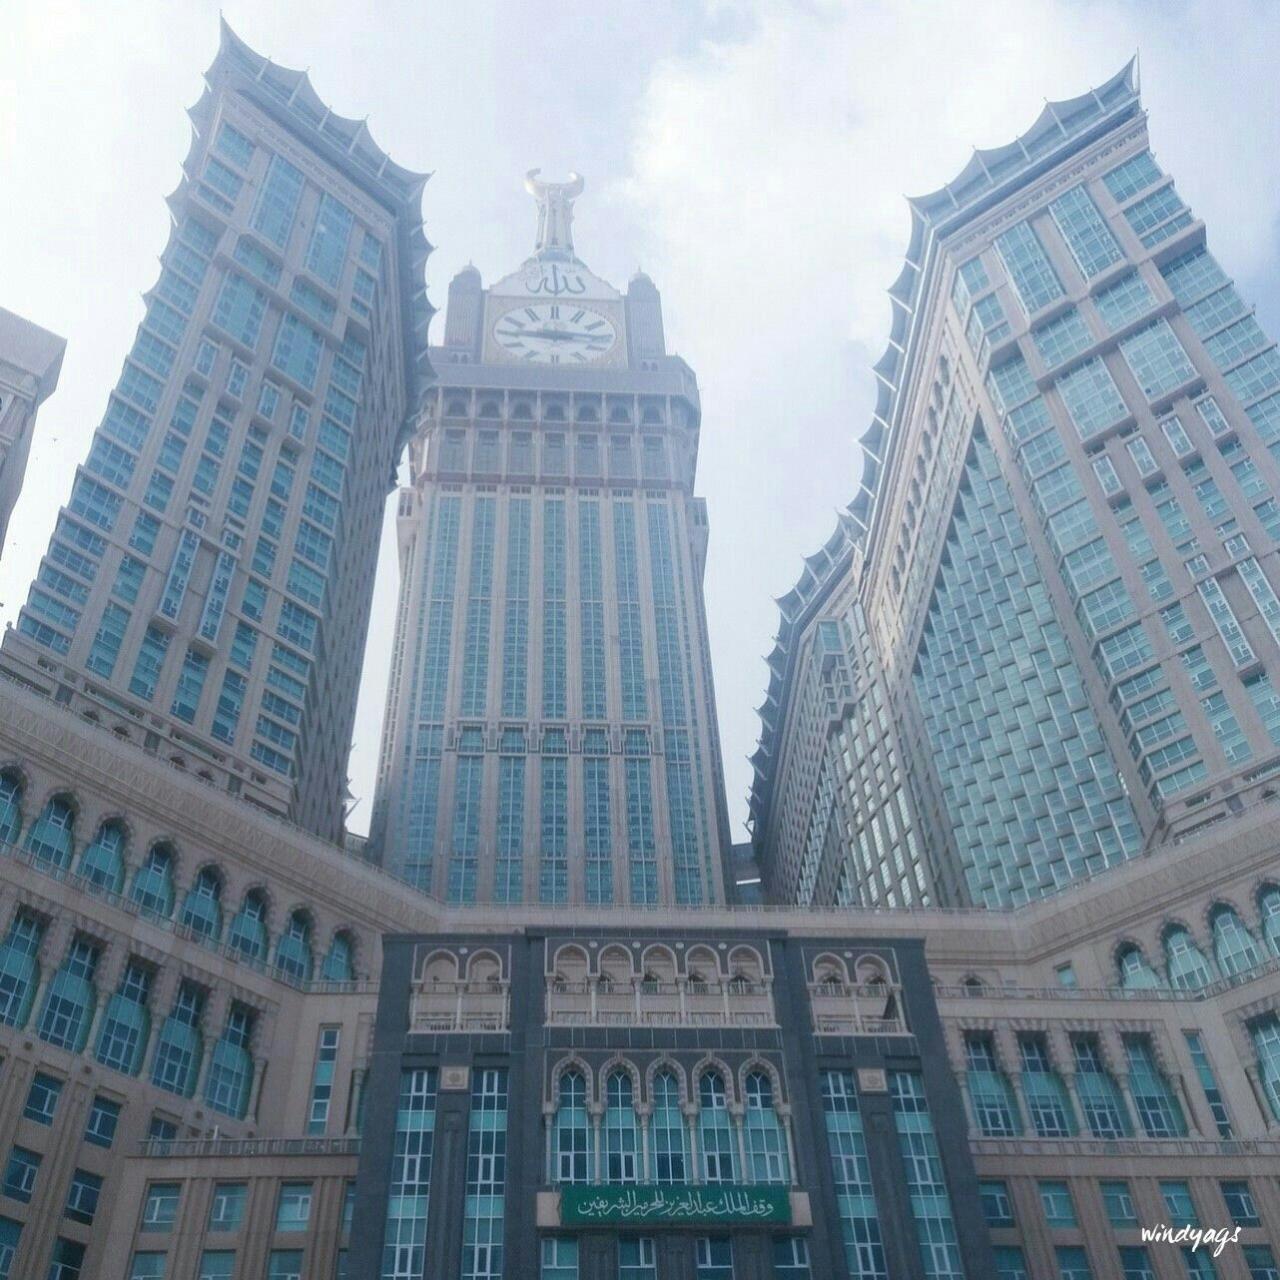 Clock tower makkah royal mecca saudi arabia towers tallest al abraj bait buildings building tall burj hotel height complex city